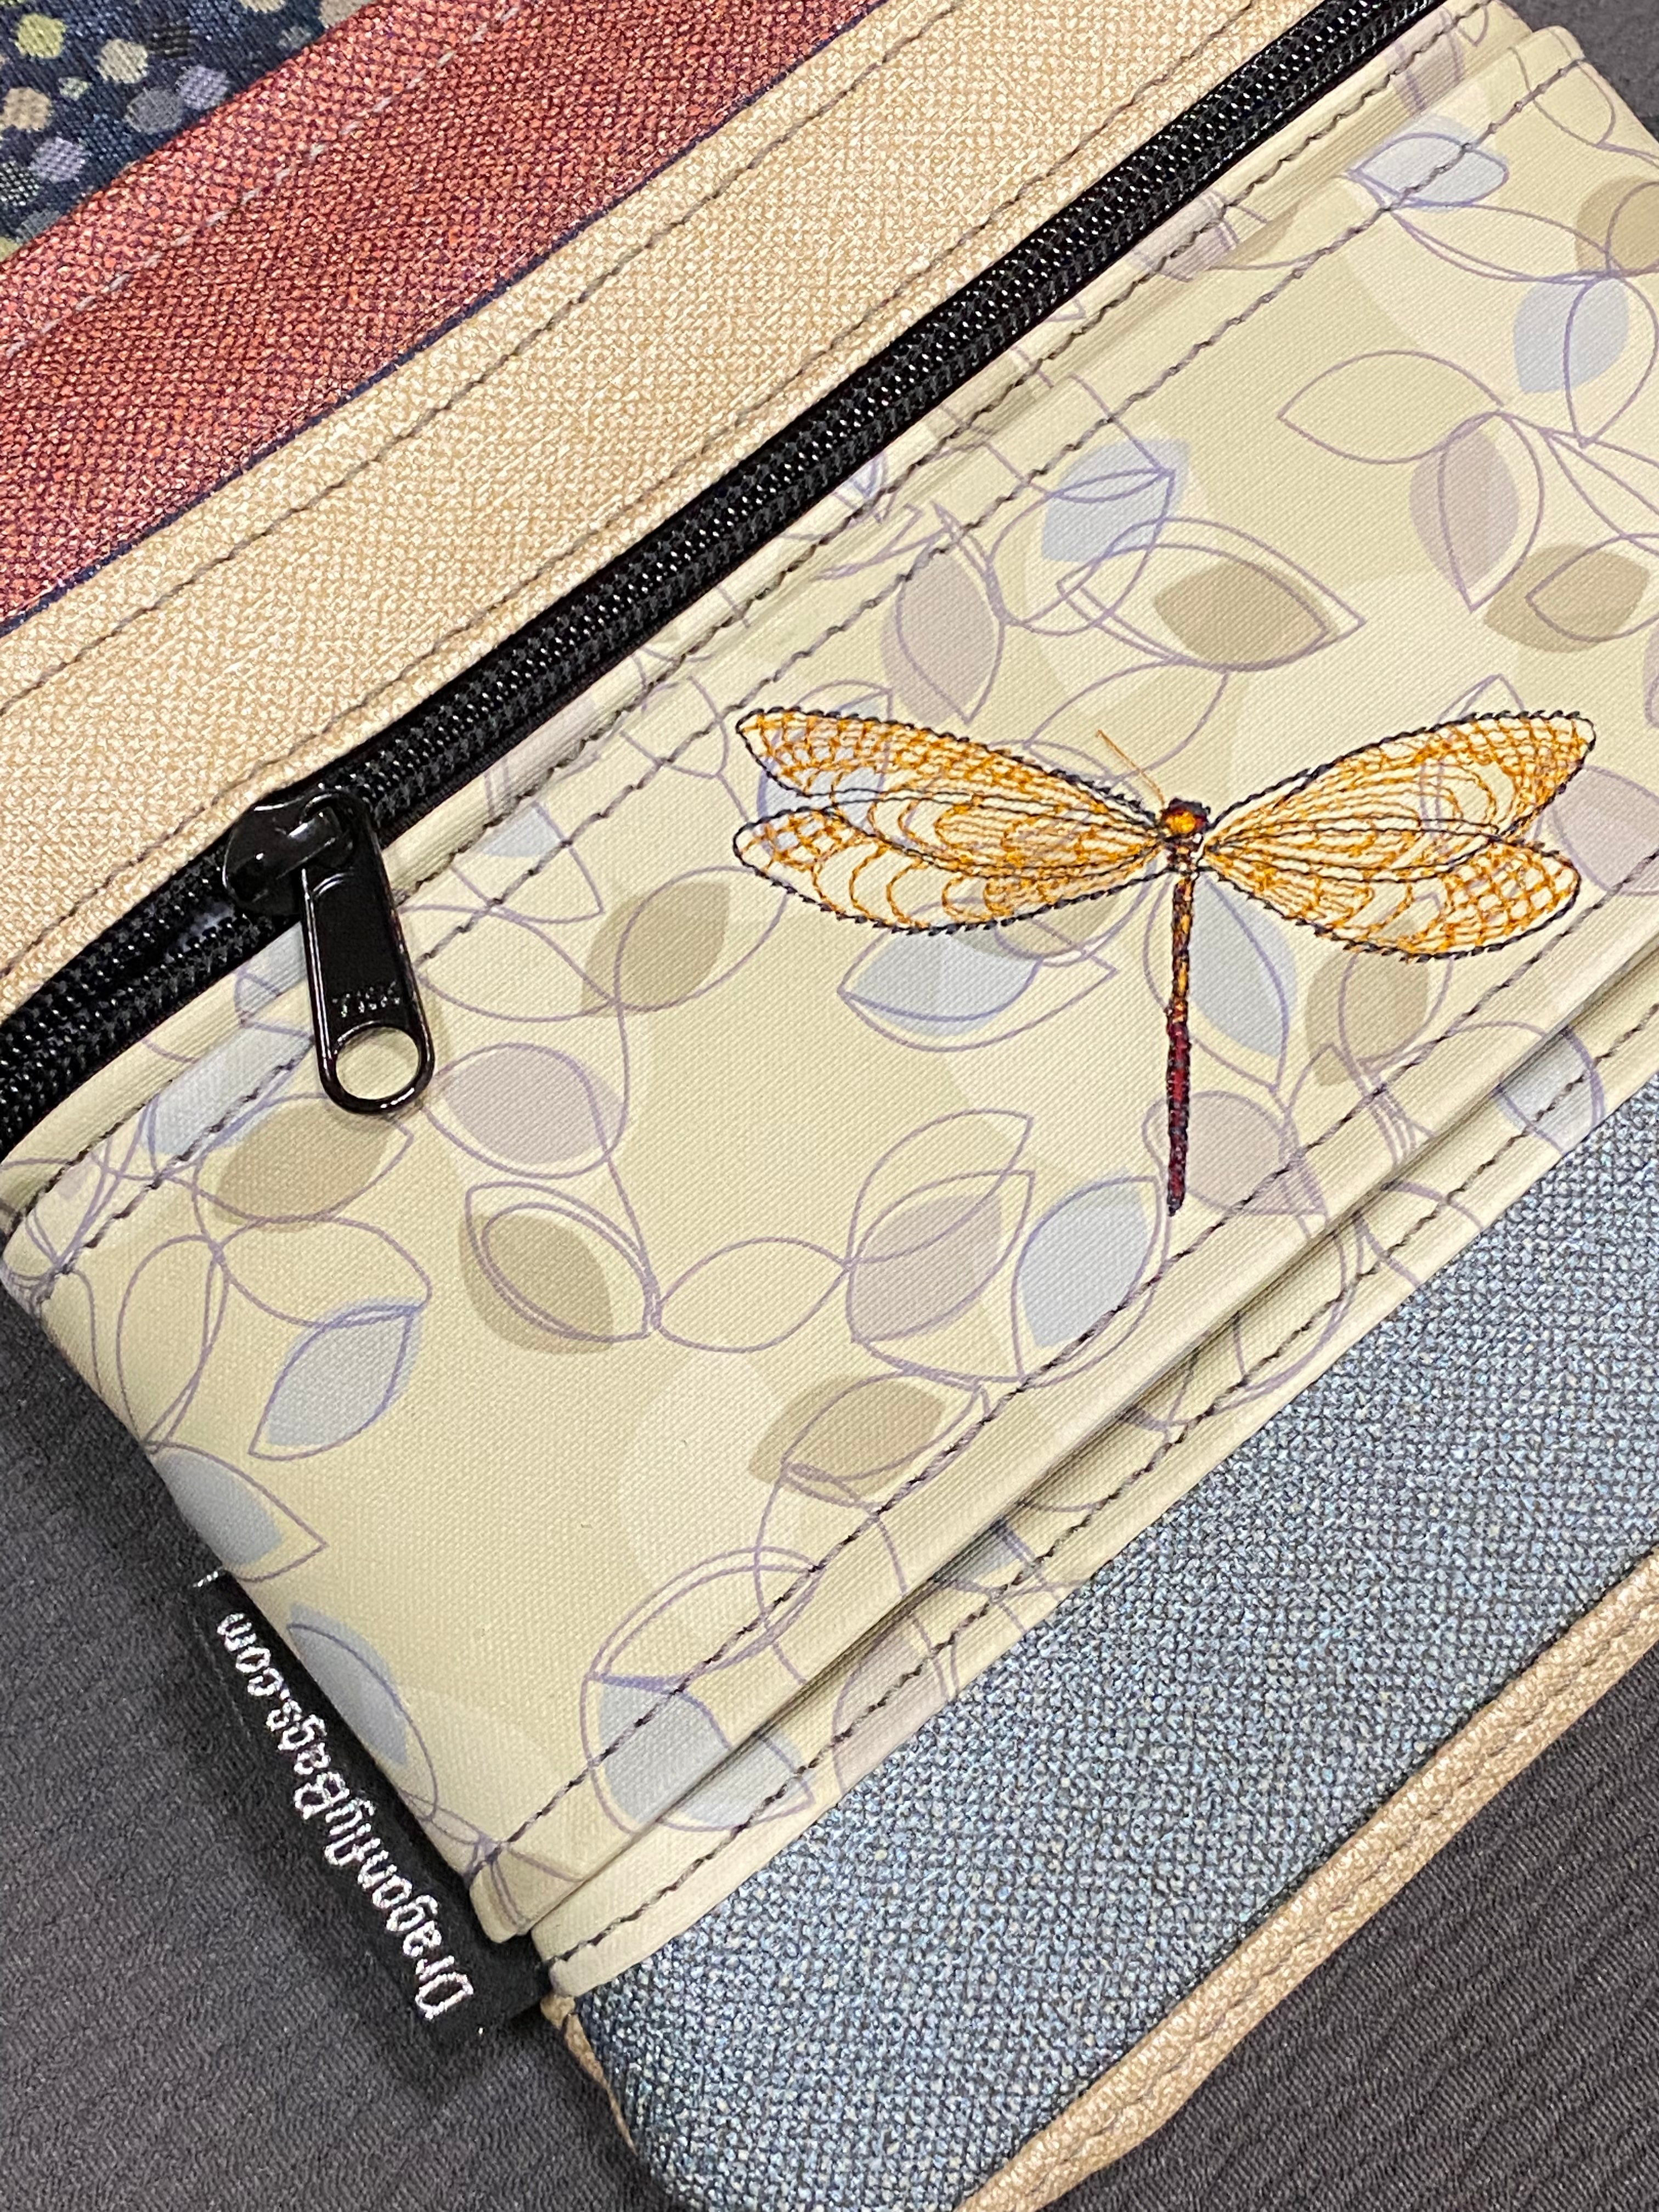 Dragonfly "Springime" Crossbody Bag